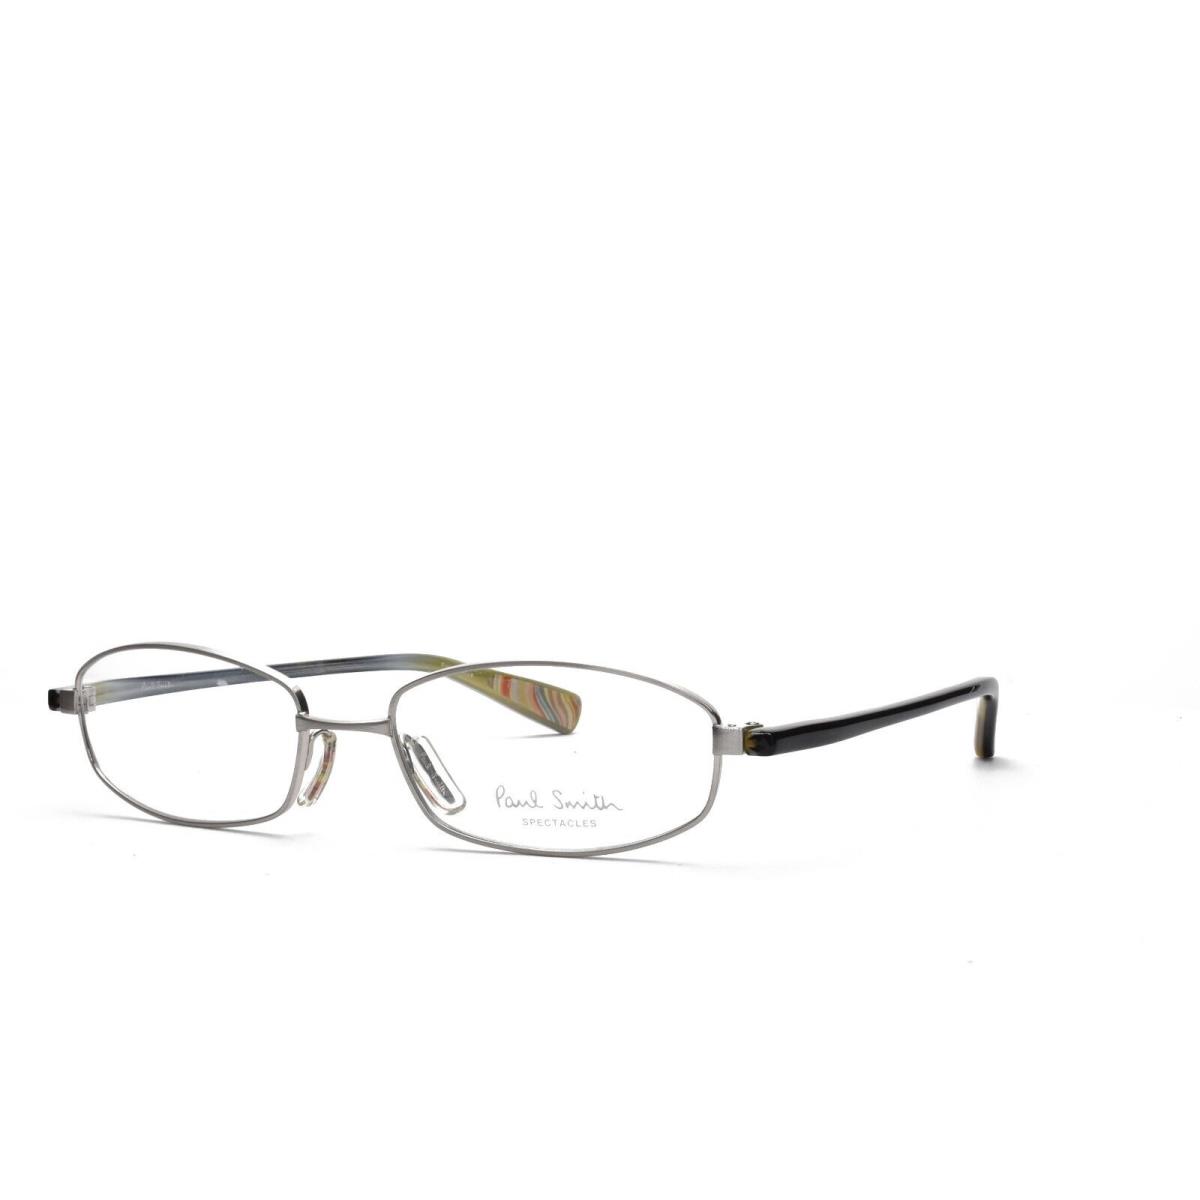 Paul Smith 194 BP 51-16-140 Silver Vtg Vintage Eyeglasses Frames